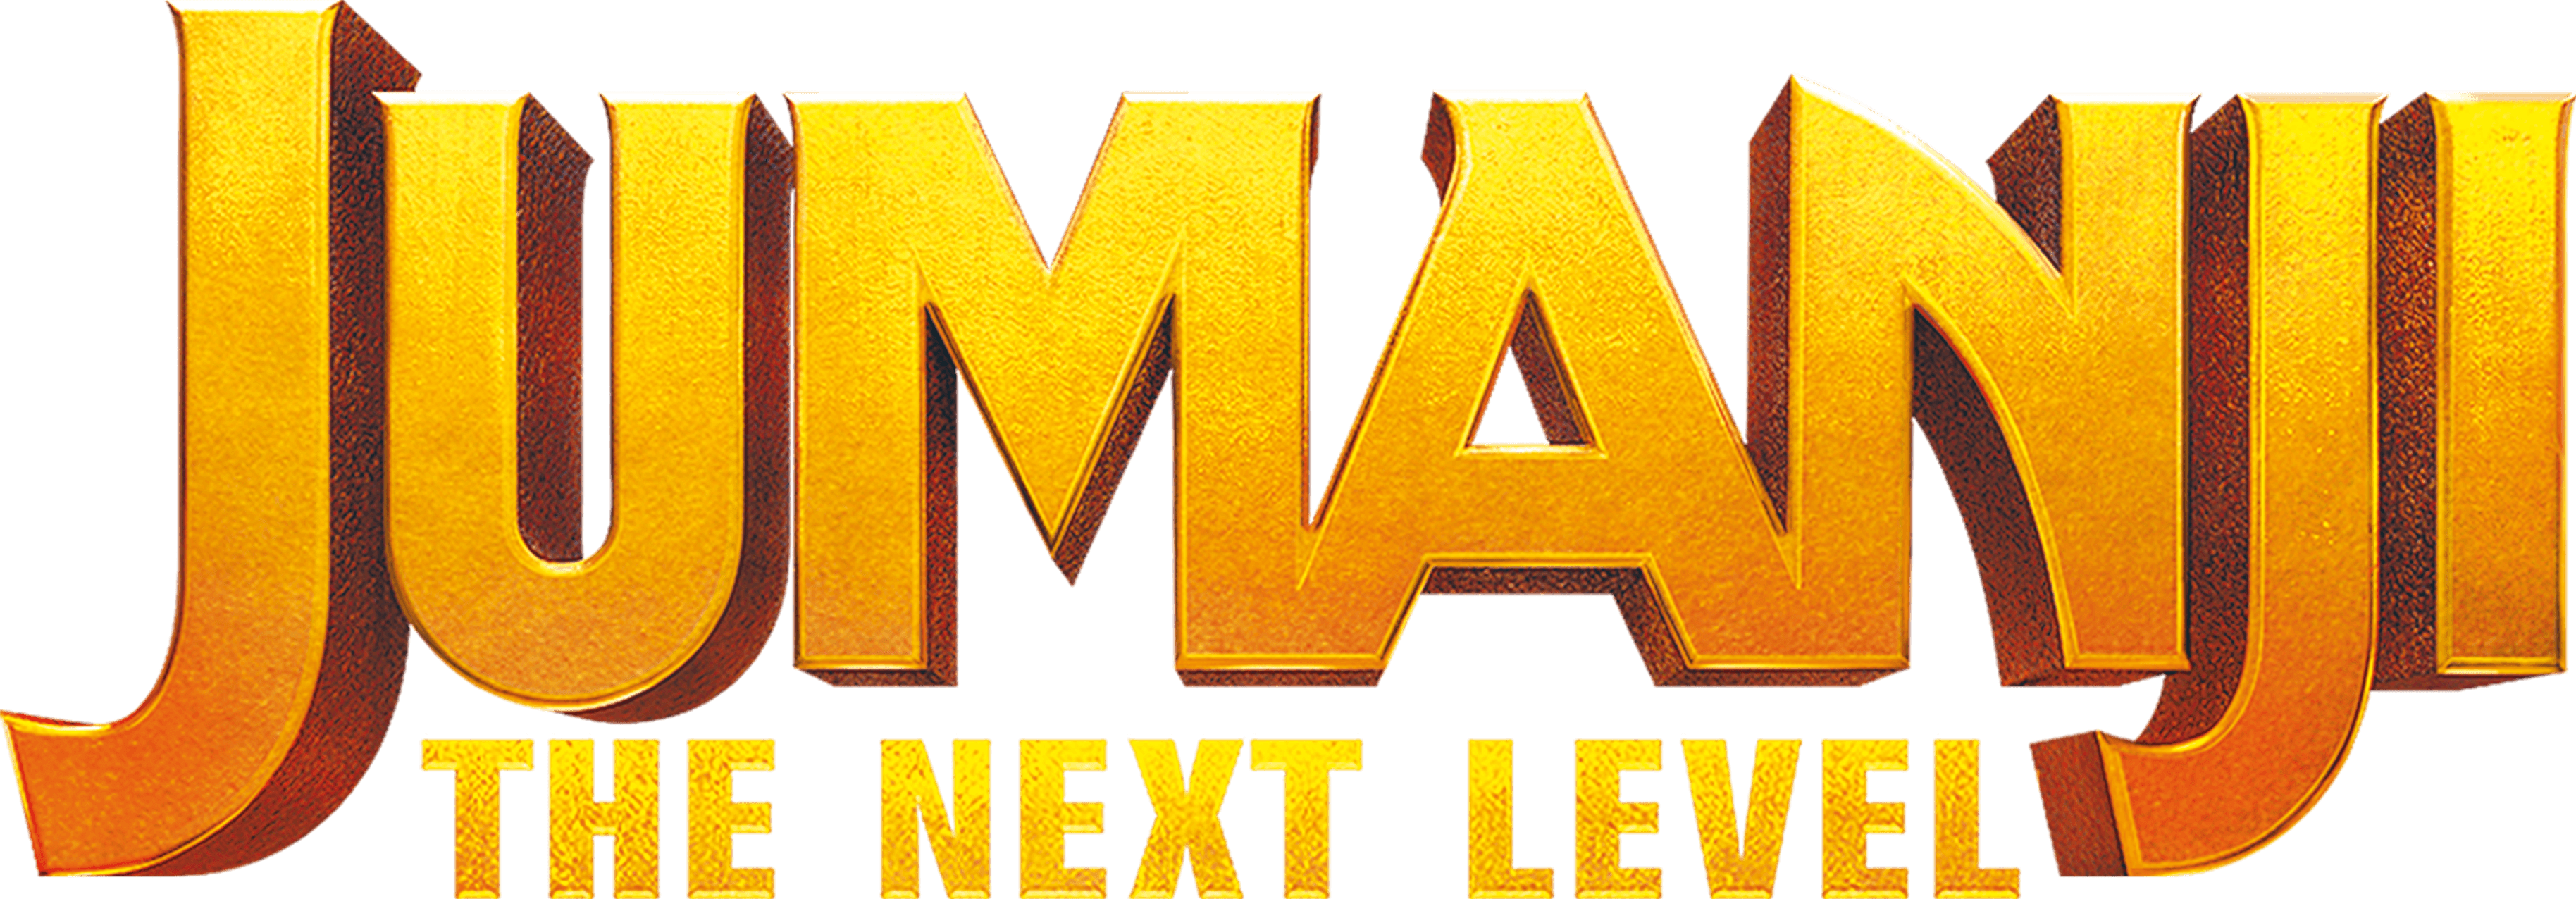 Jumanji: The Next Level logo